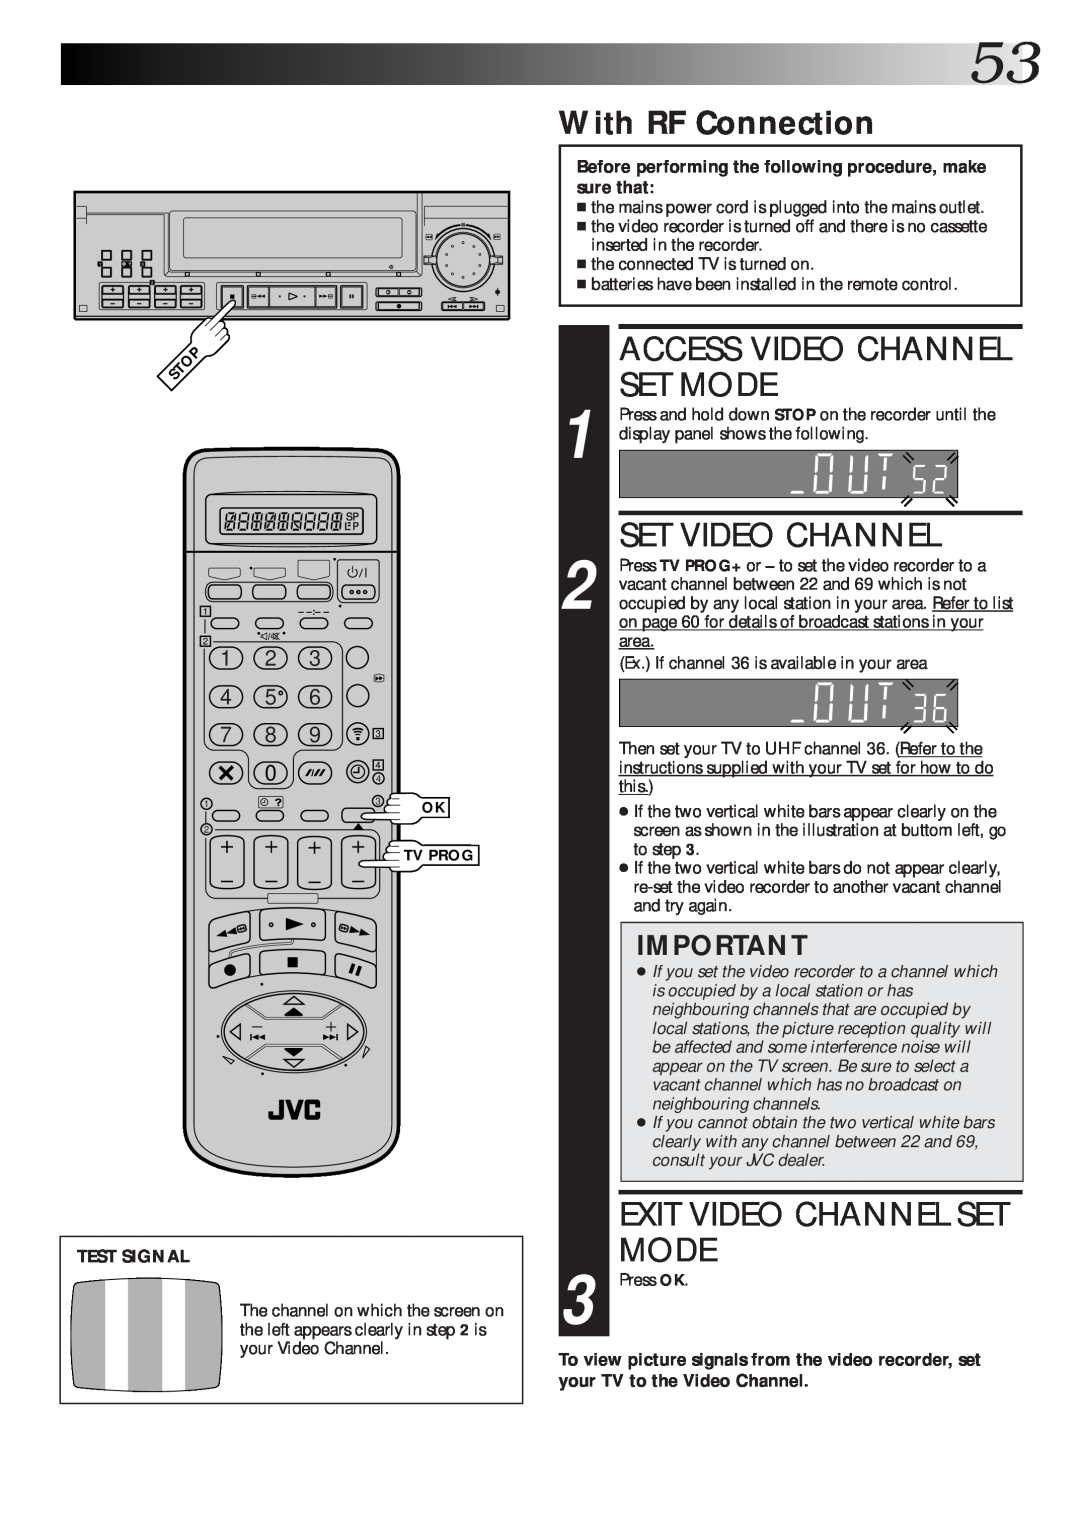 JVC HR-S9600EK With RF Connection, Access Video Channel Set Mode, Set Video Channel, Exit Video Channel Set Mode 